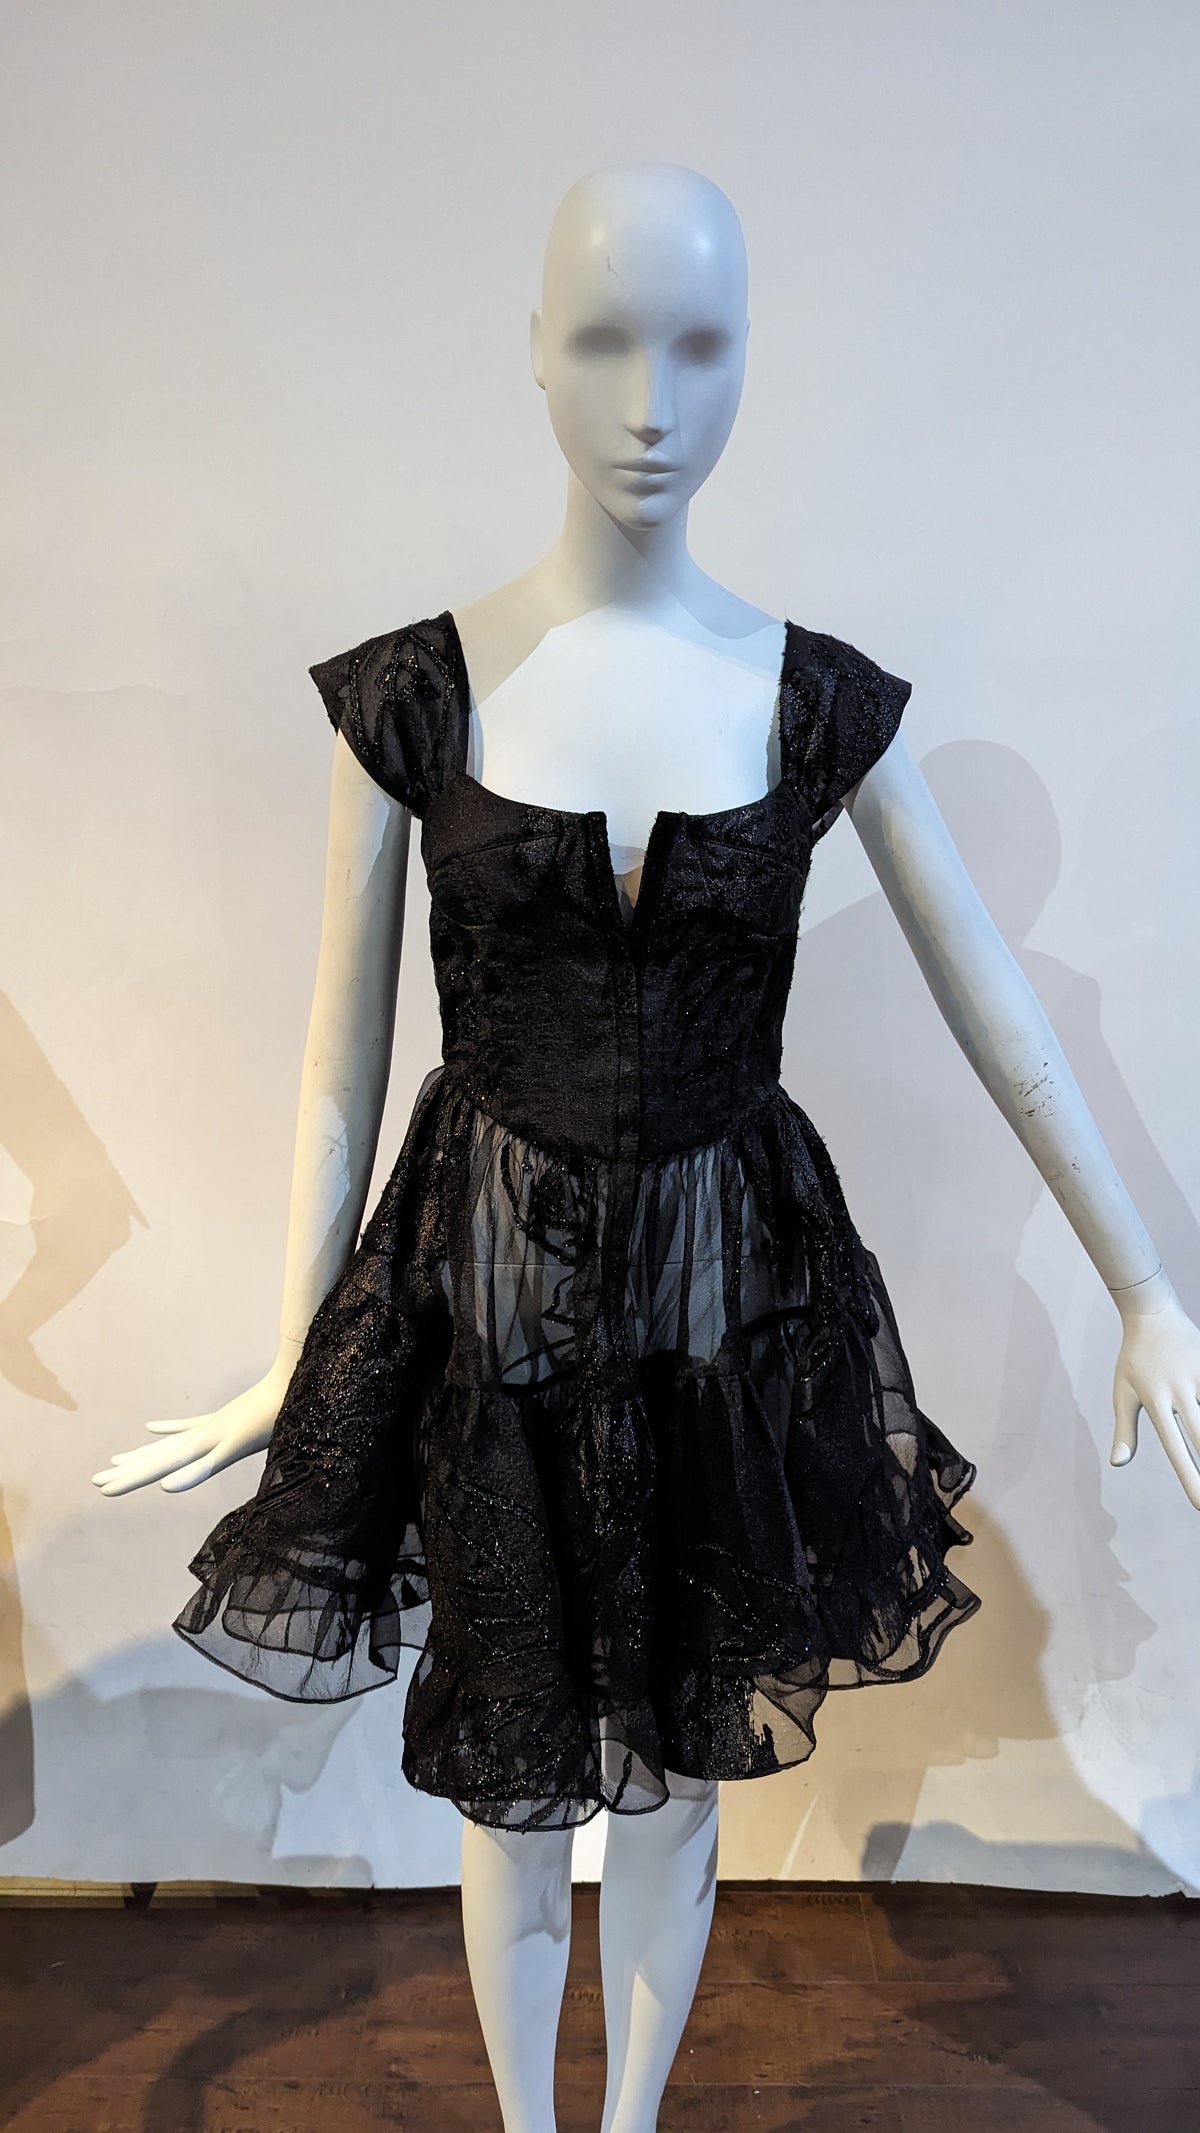 SAMPLE SALE - Black Ruffle Dress X-Small - FINAL SALE